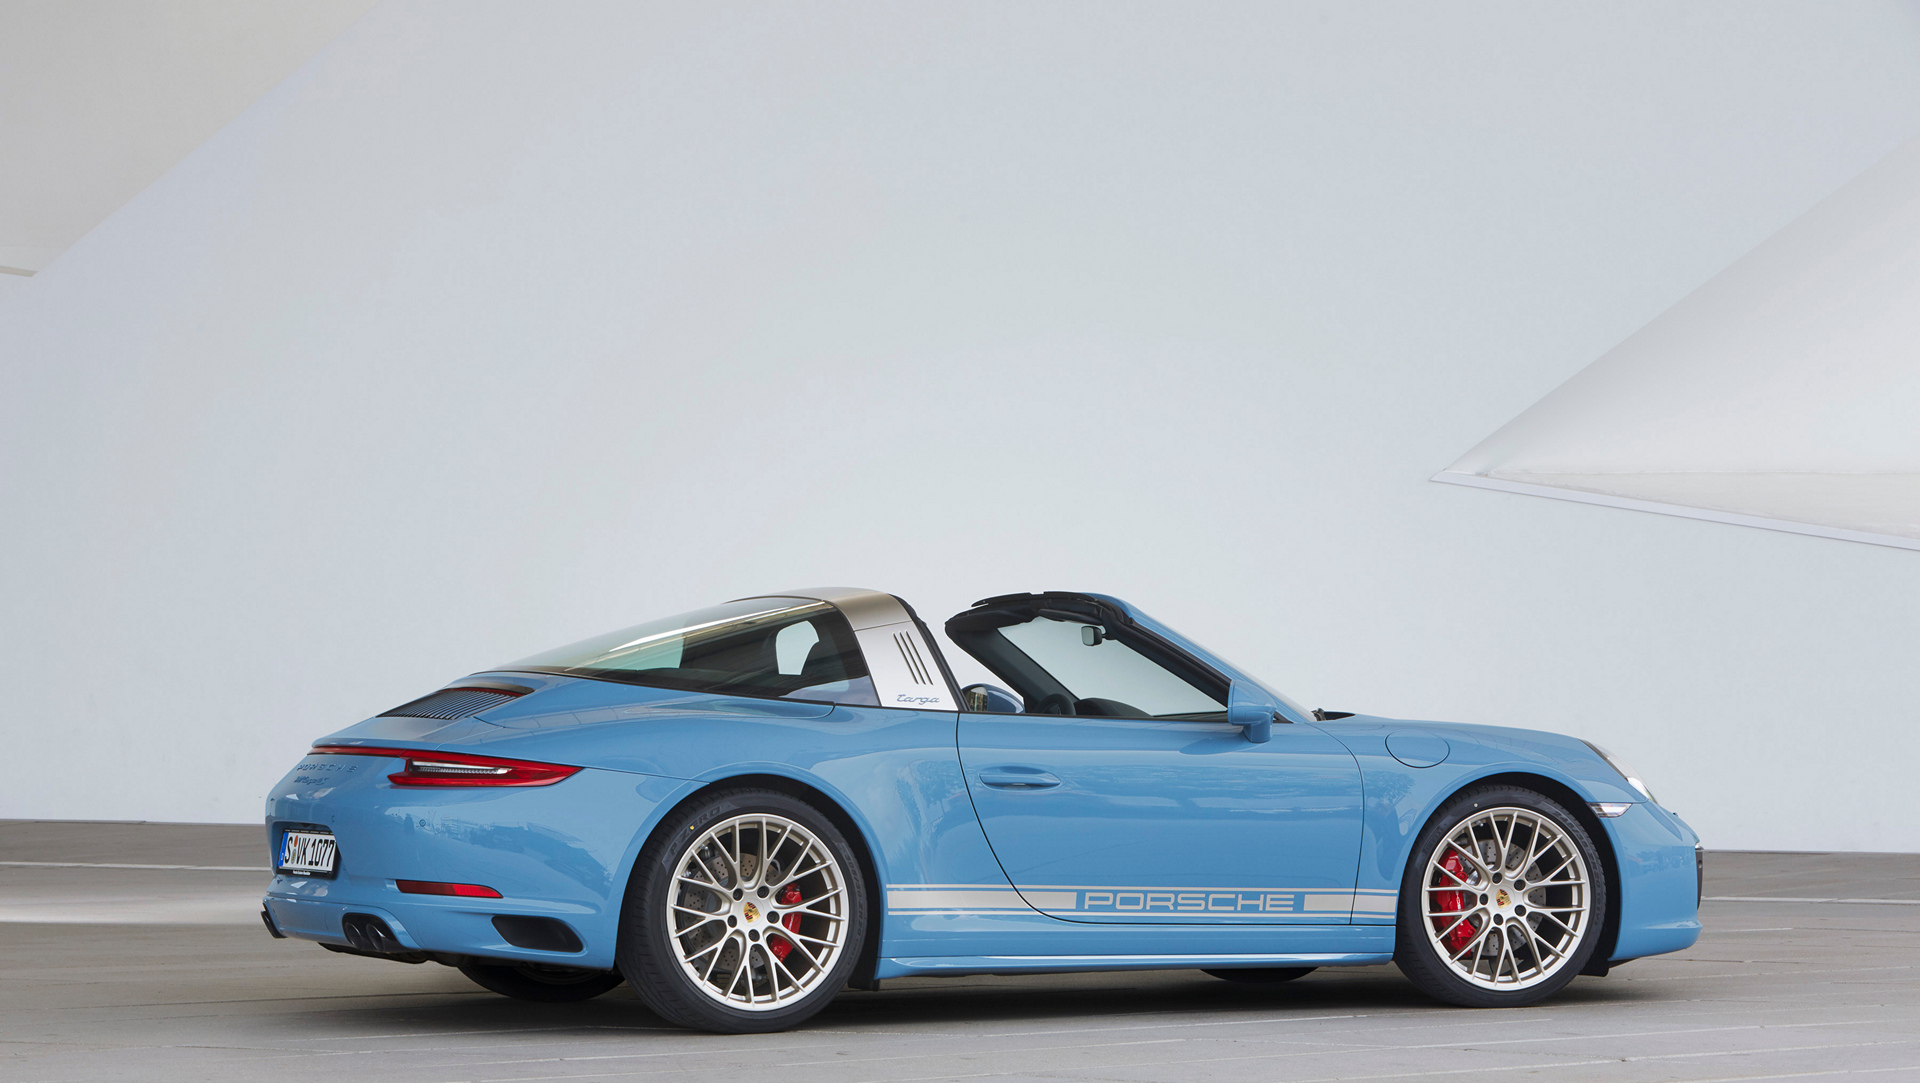 911 Targa 4S Exclusive Design Edition © Dr. Ing. h.c. F. Porsche AG